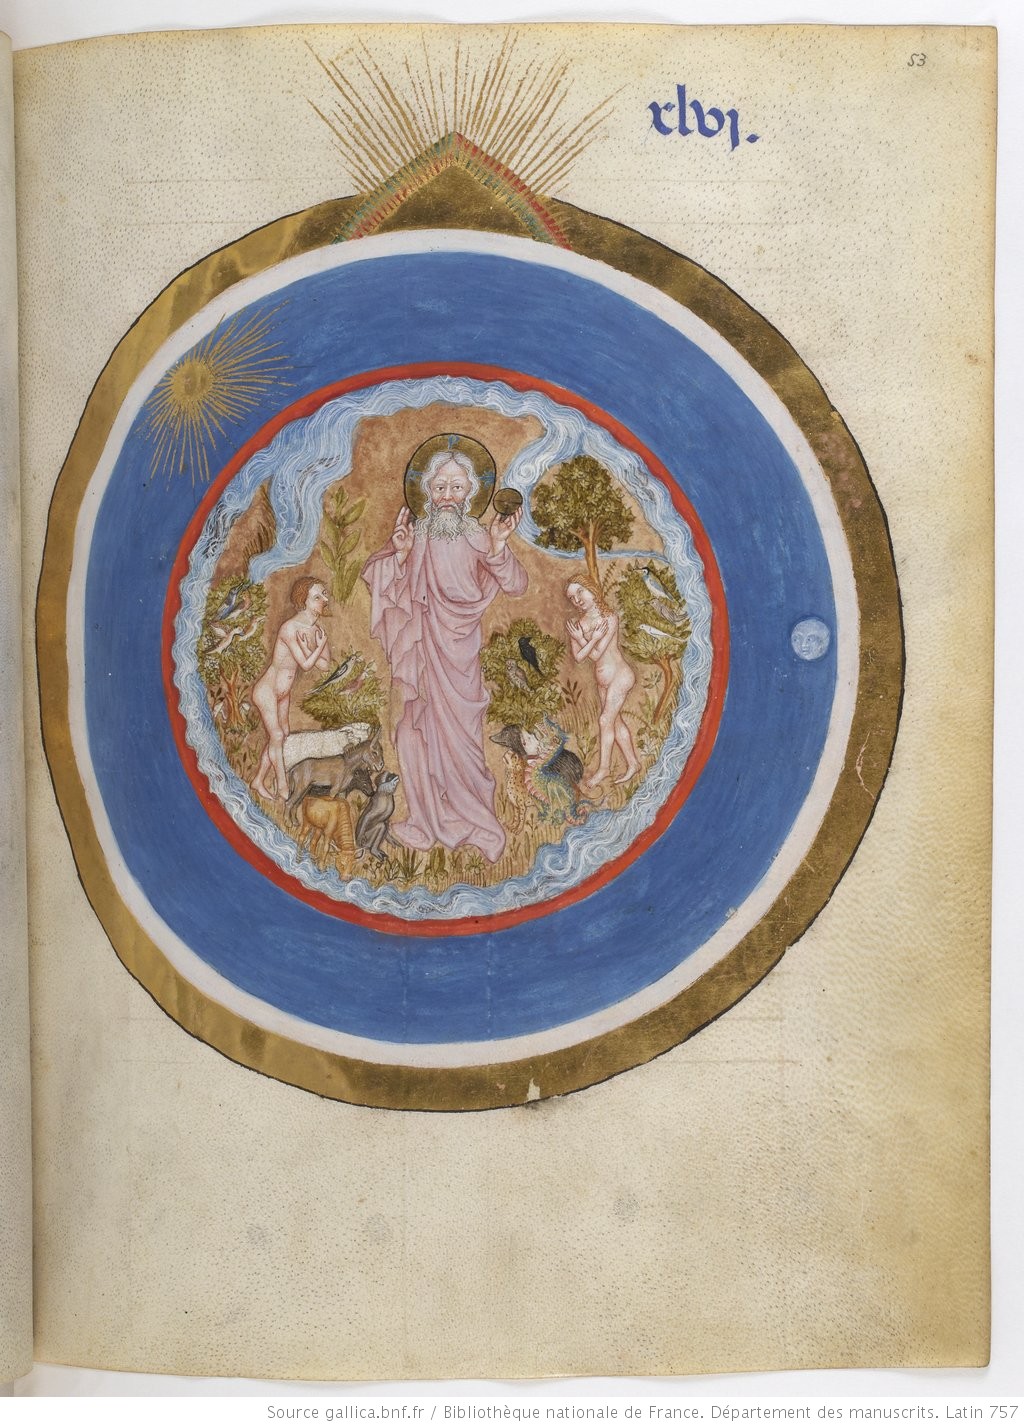 7 Samedi Missel a l’usage des freres mineurs, Lombardie, 1388, Gallica BNF ms. lat. 757, fol. 53r